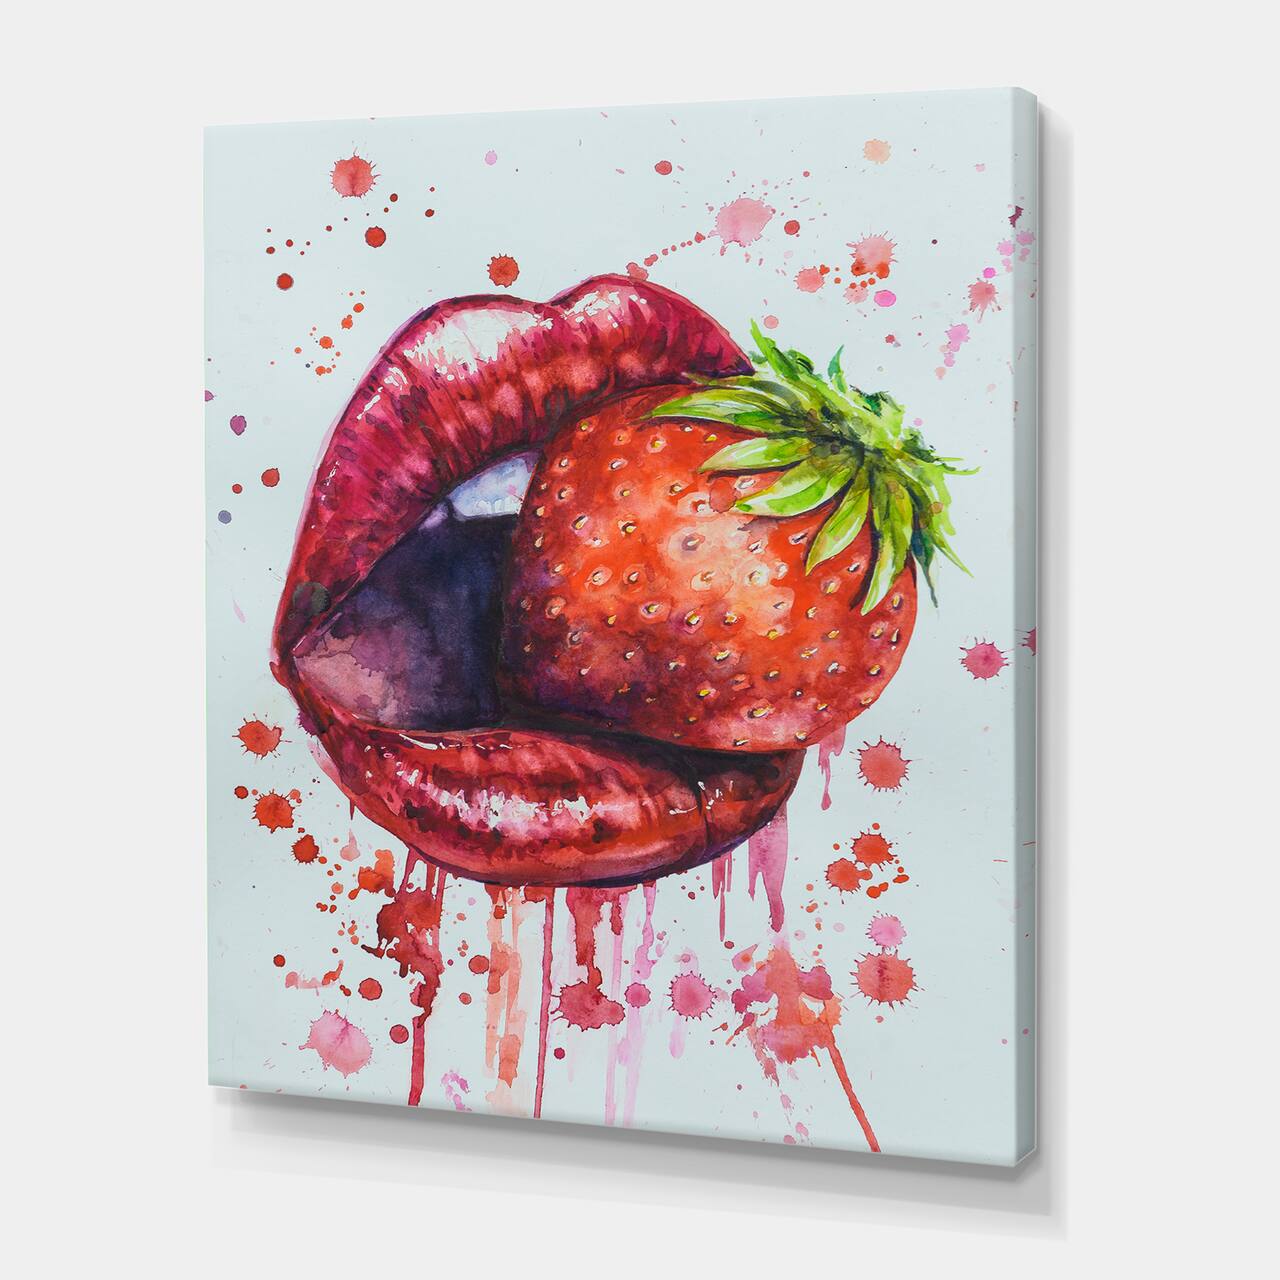 Designart - Red Woman Lips Eating A Strawberry - Modern Canvas Wall Art Print